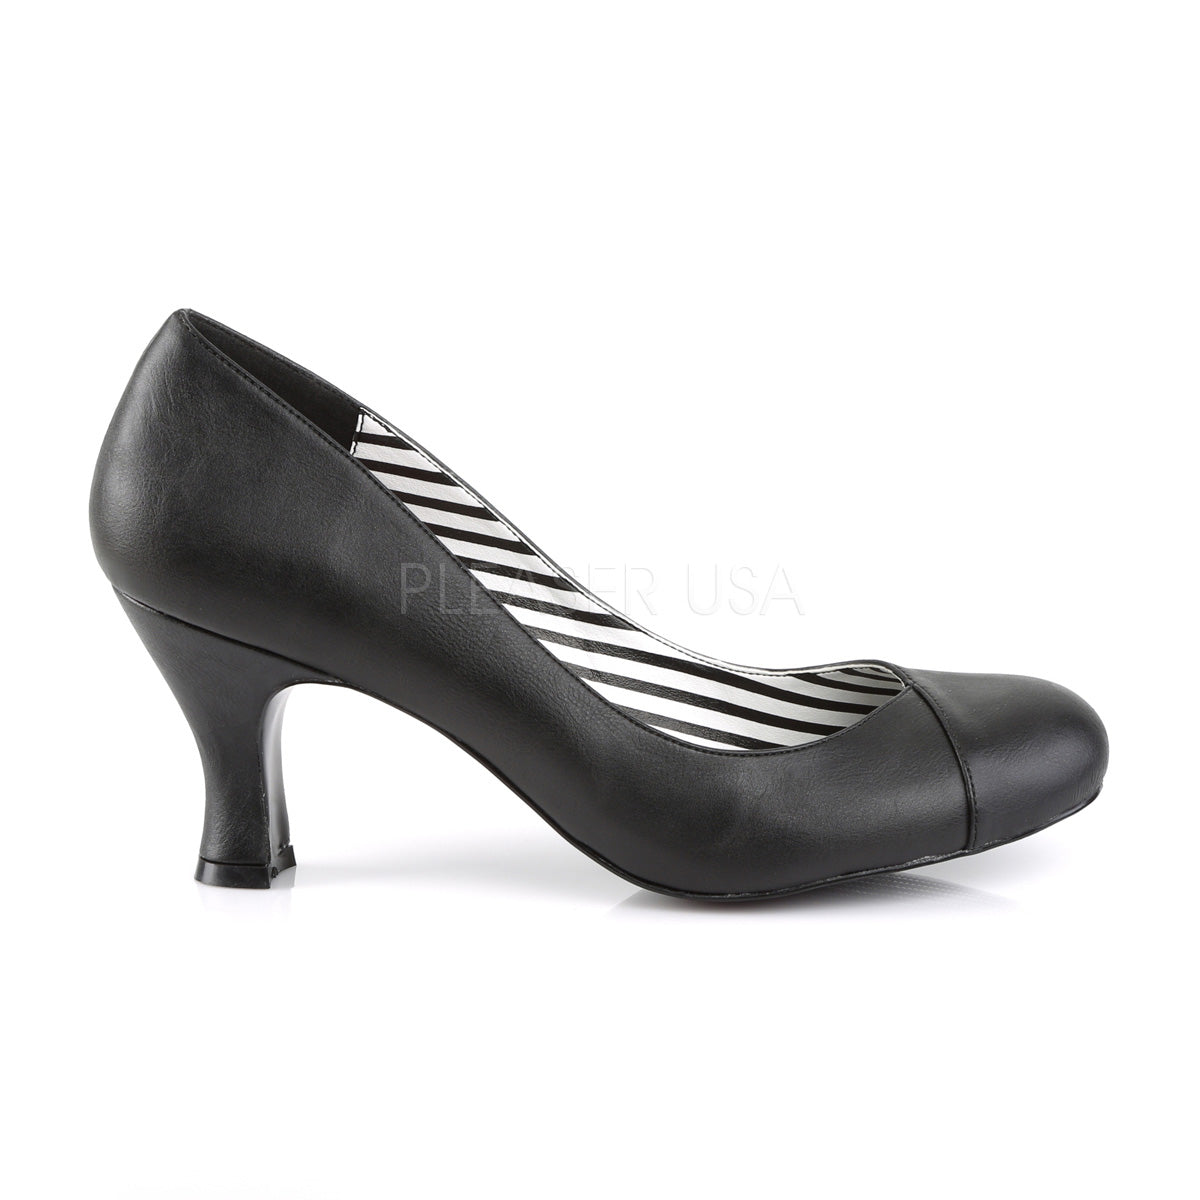 Black Pumps 3 inch Heels .Gold trim.NICE ! Clean. Some wear. Size 7 1/2. |  eBay